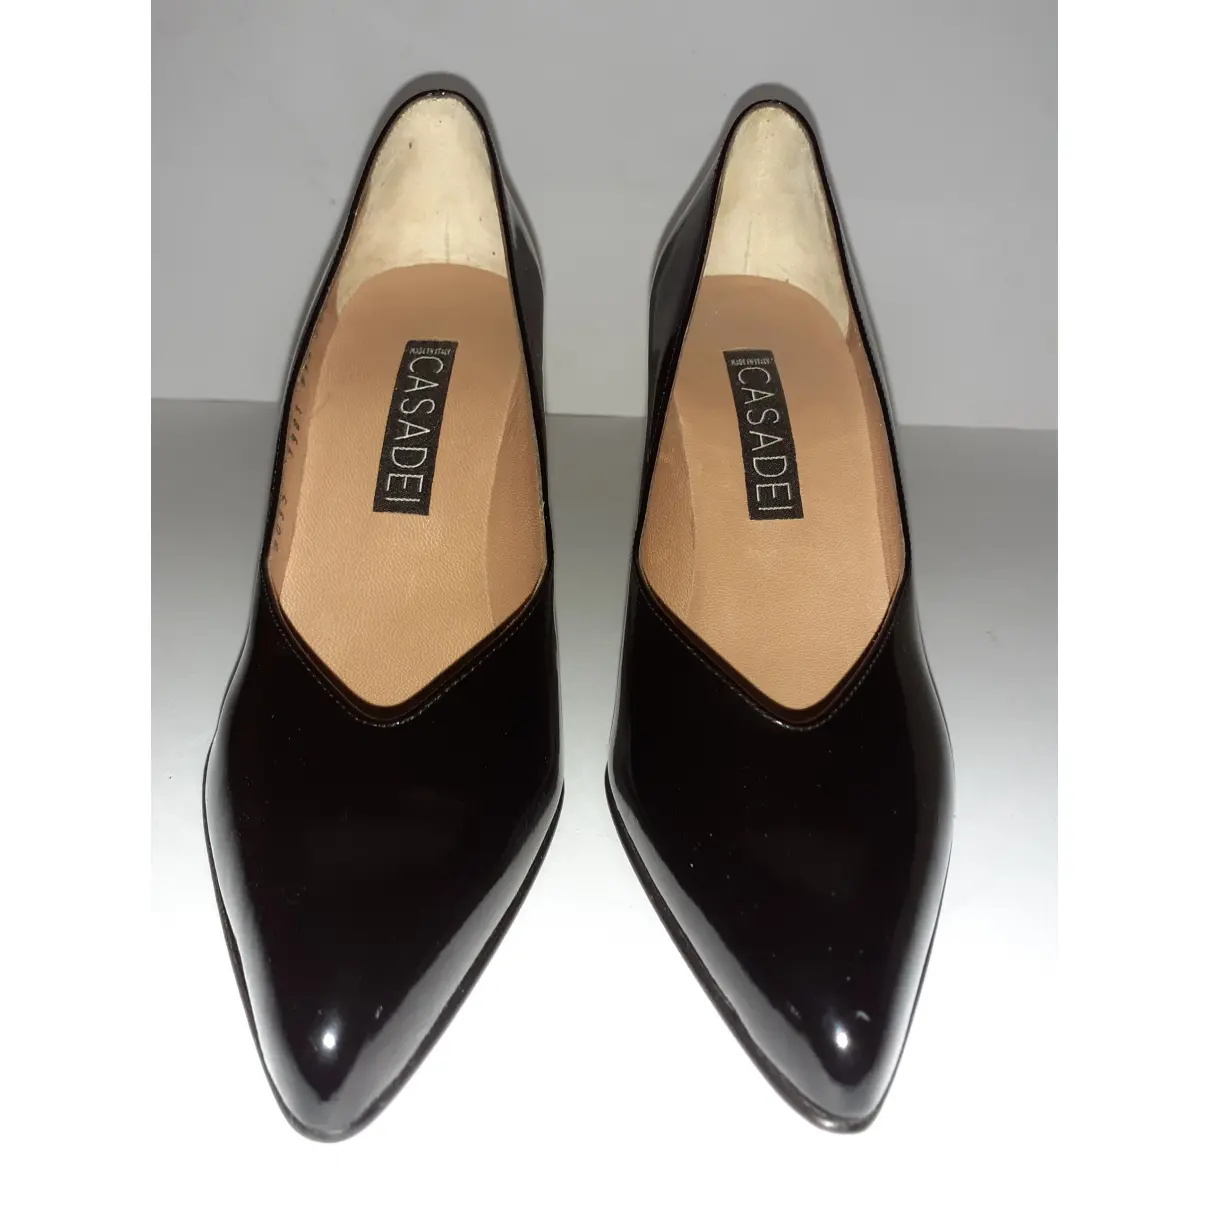 Buy Casadei Patent leather heels online